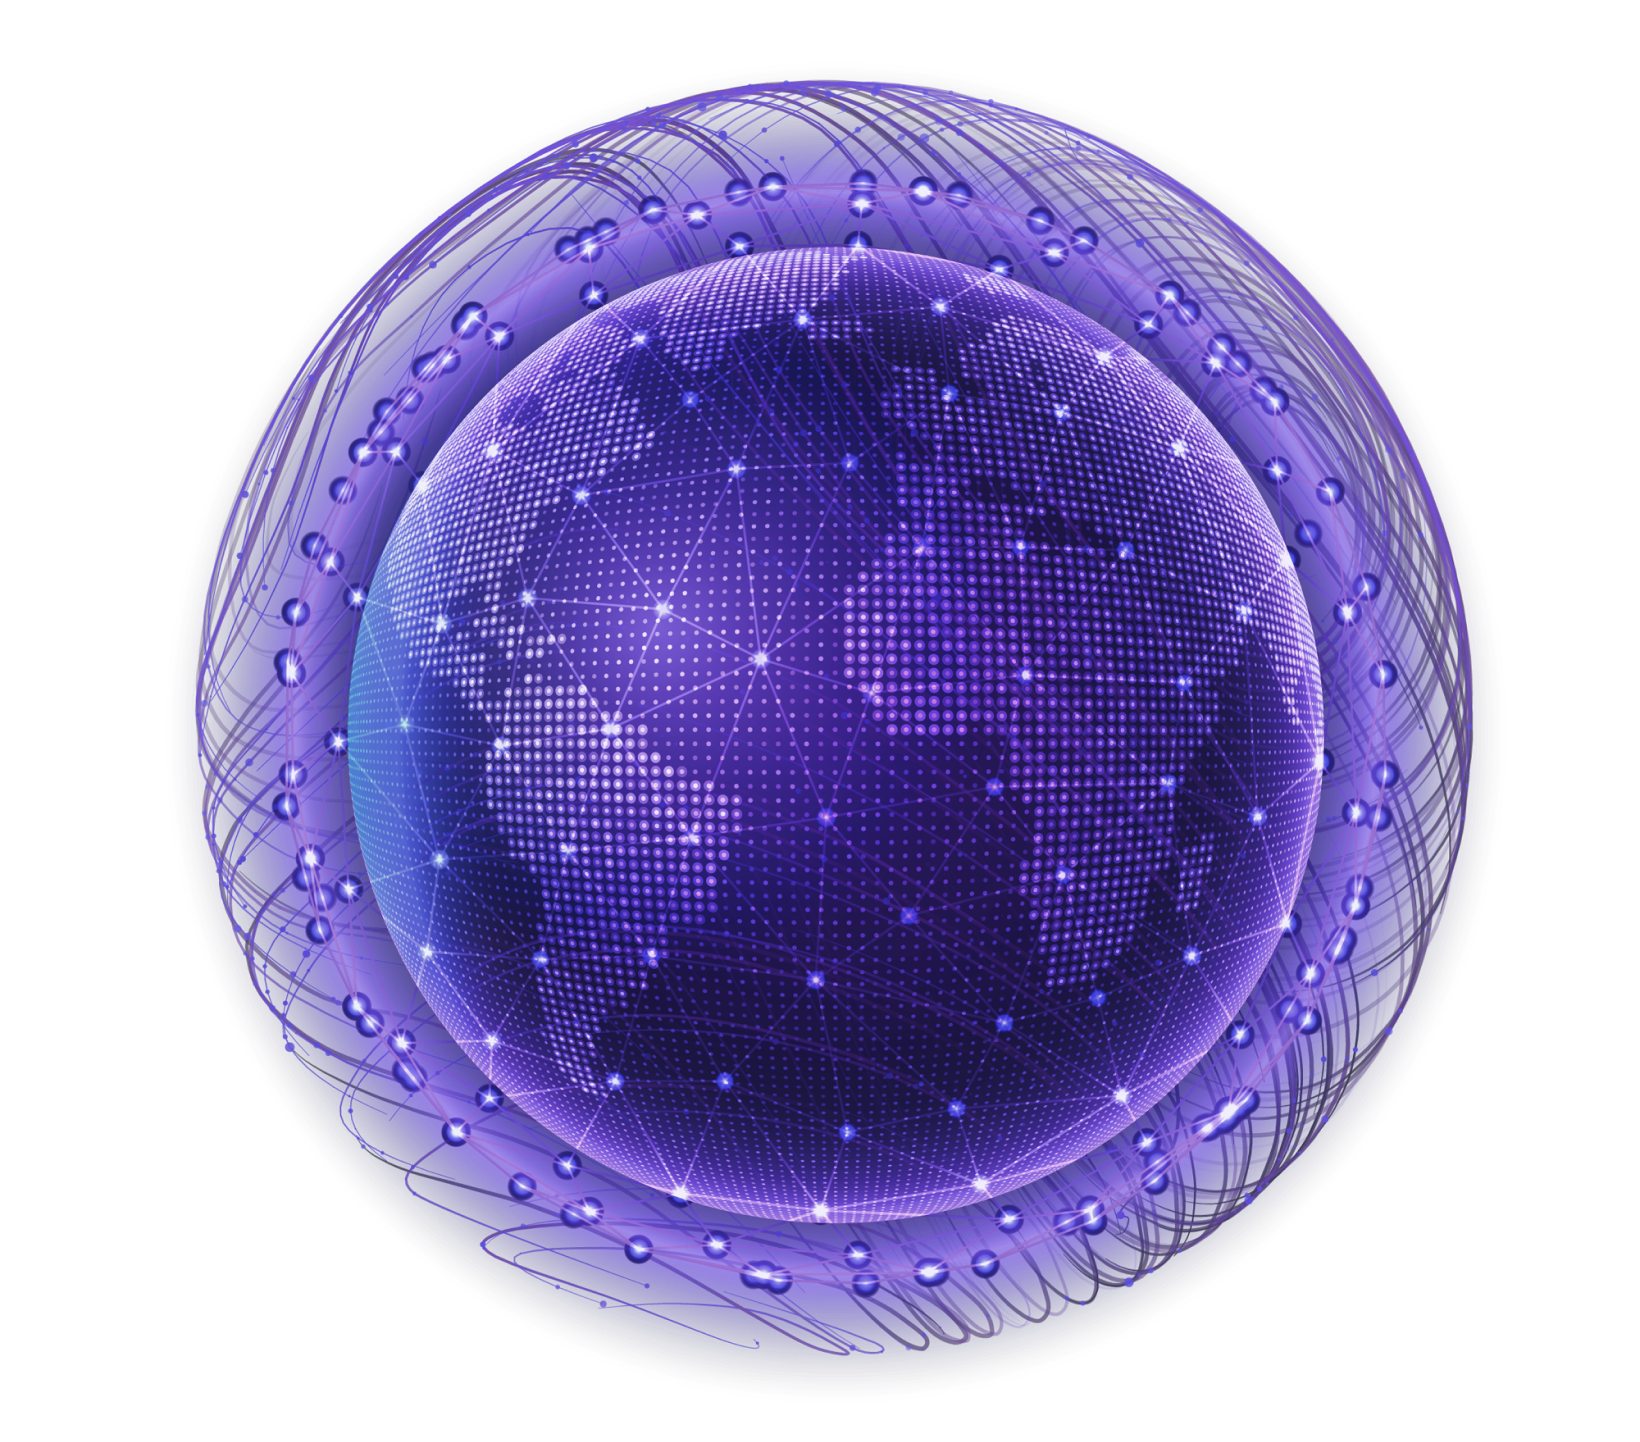 /_next/static/media/purple-globe.49e1c2c3.png